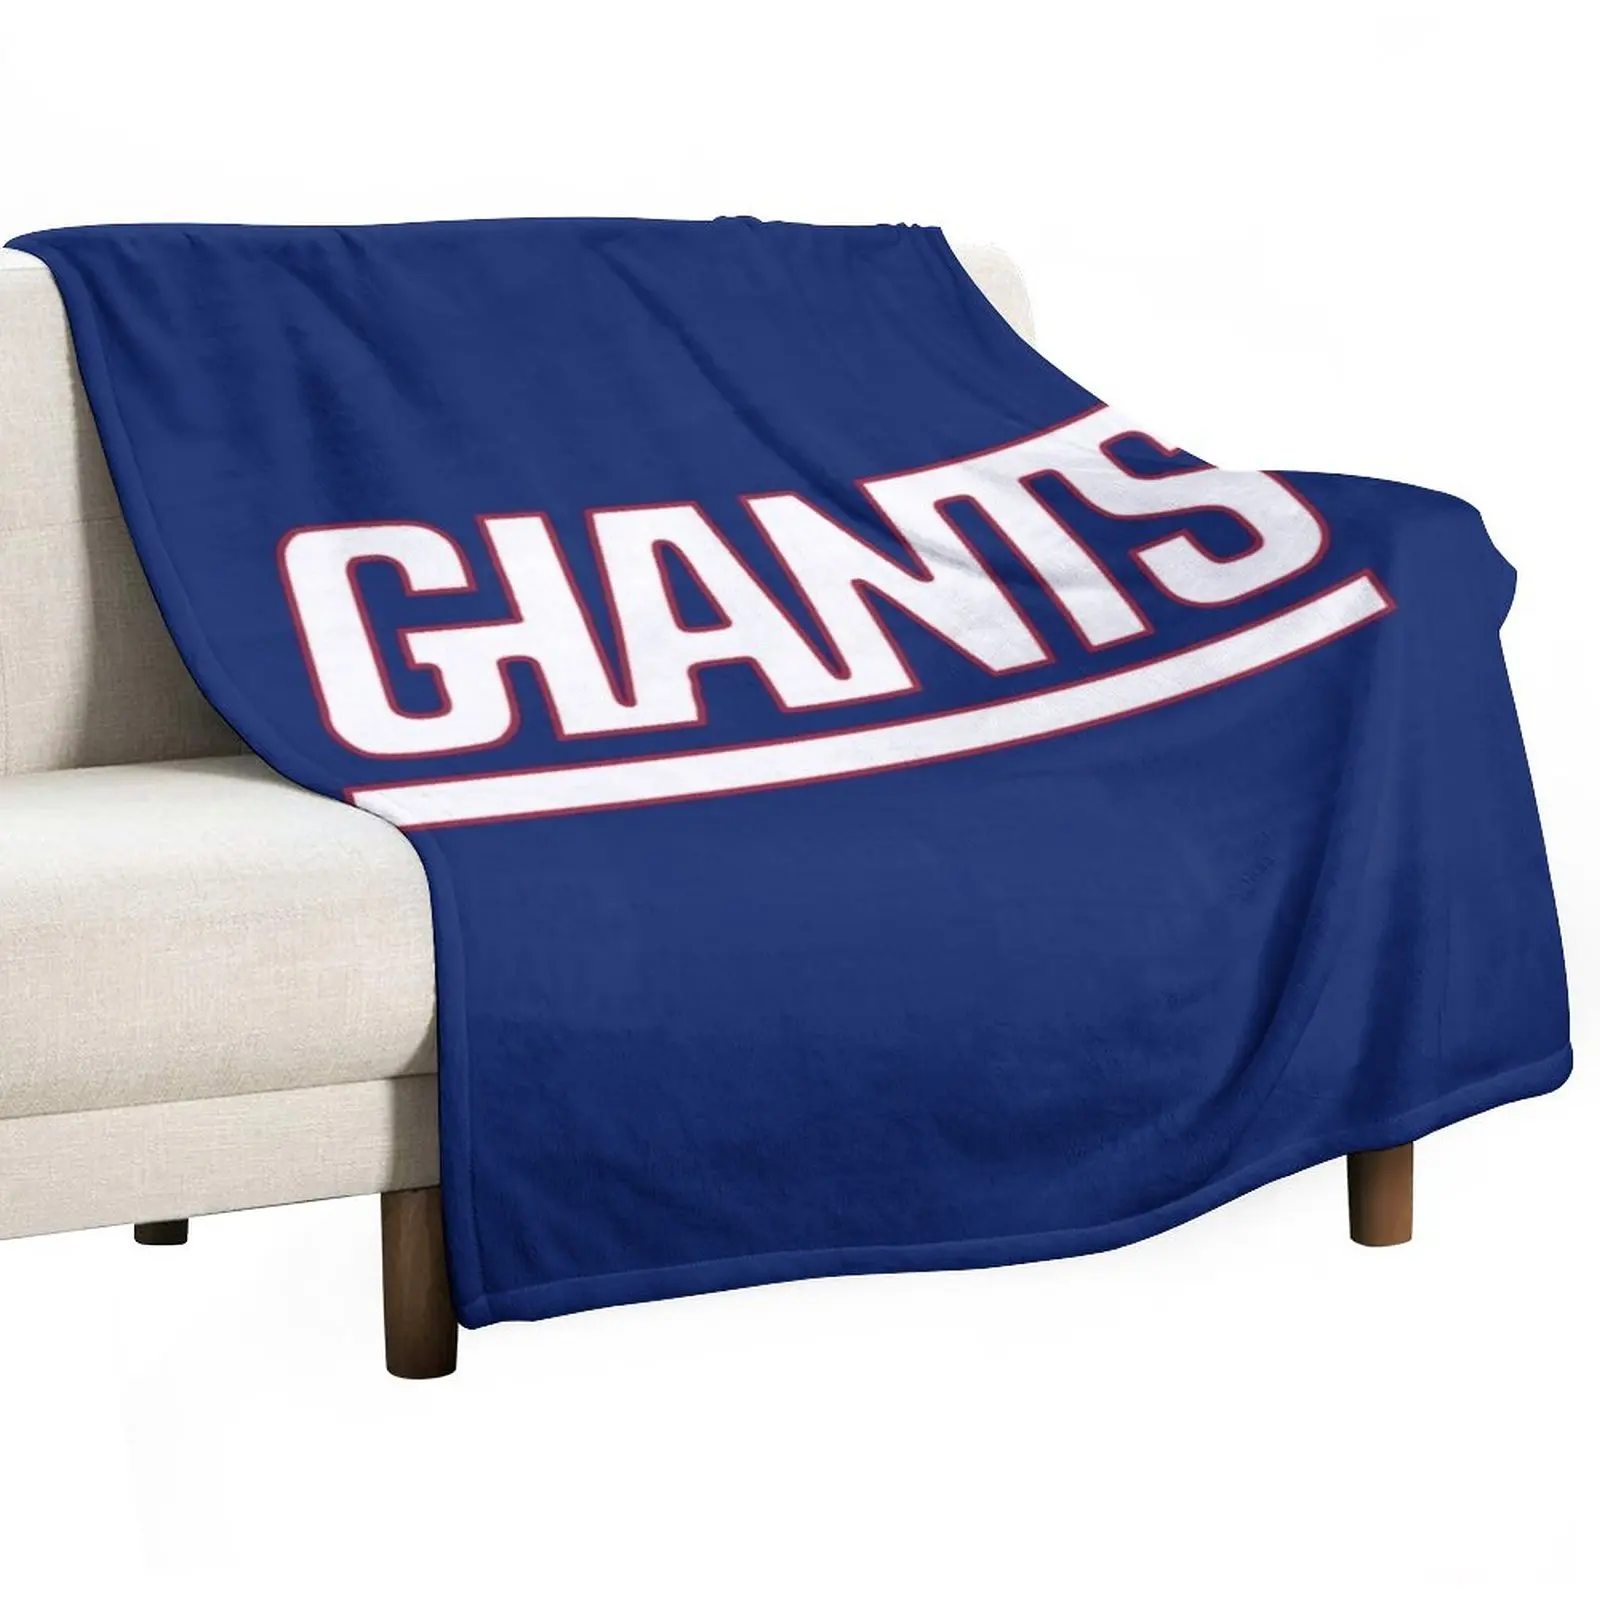 

New Giants-City Throw Blanket Soft Plush Plaid decorative Picnic Polar Blankets